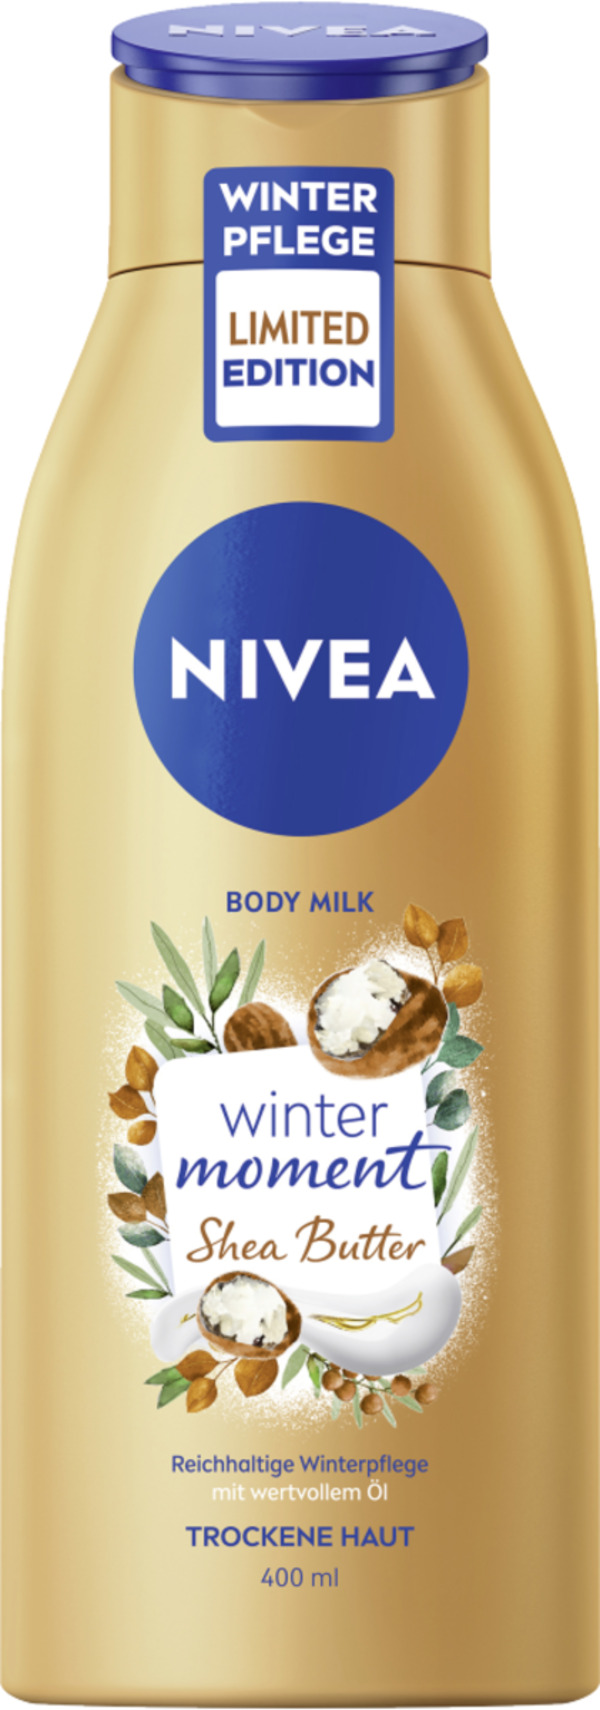 Bild 1 von NIVEA Body Milk Winter Moment Shea Butter